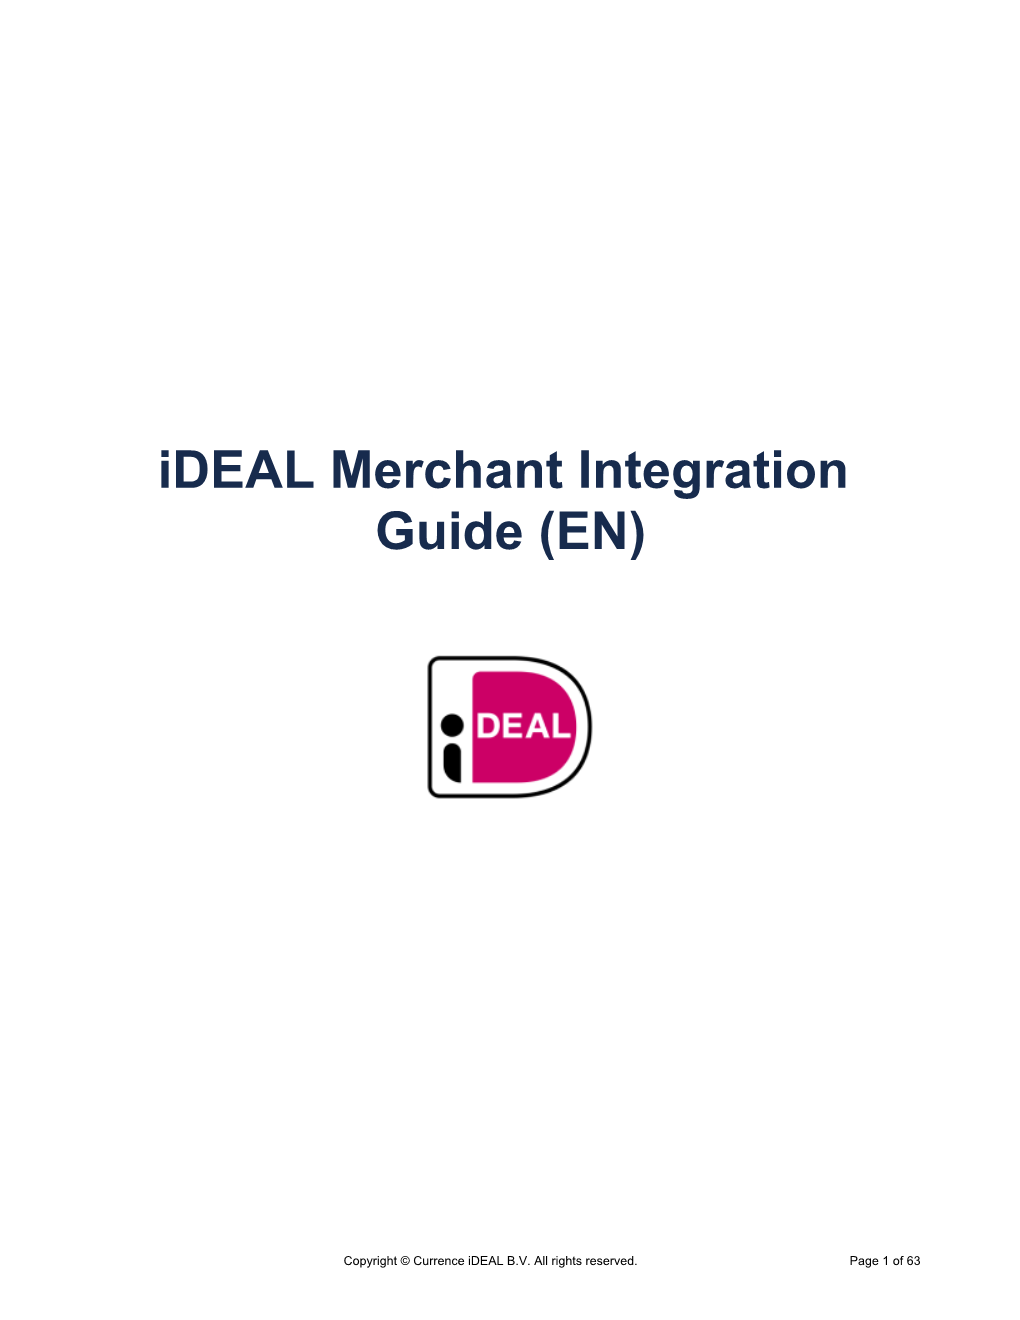 Ideal Merchant Integration Guide (EN)